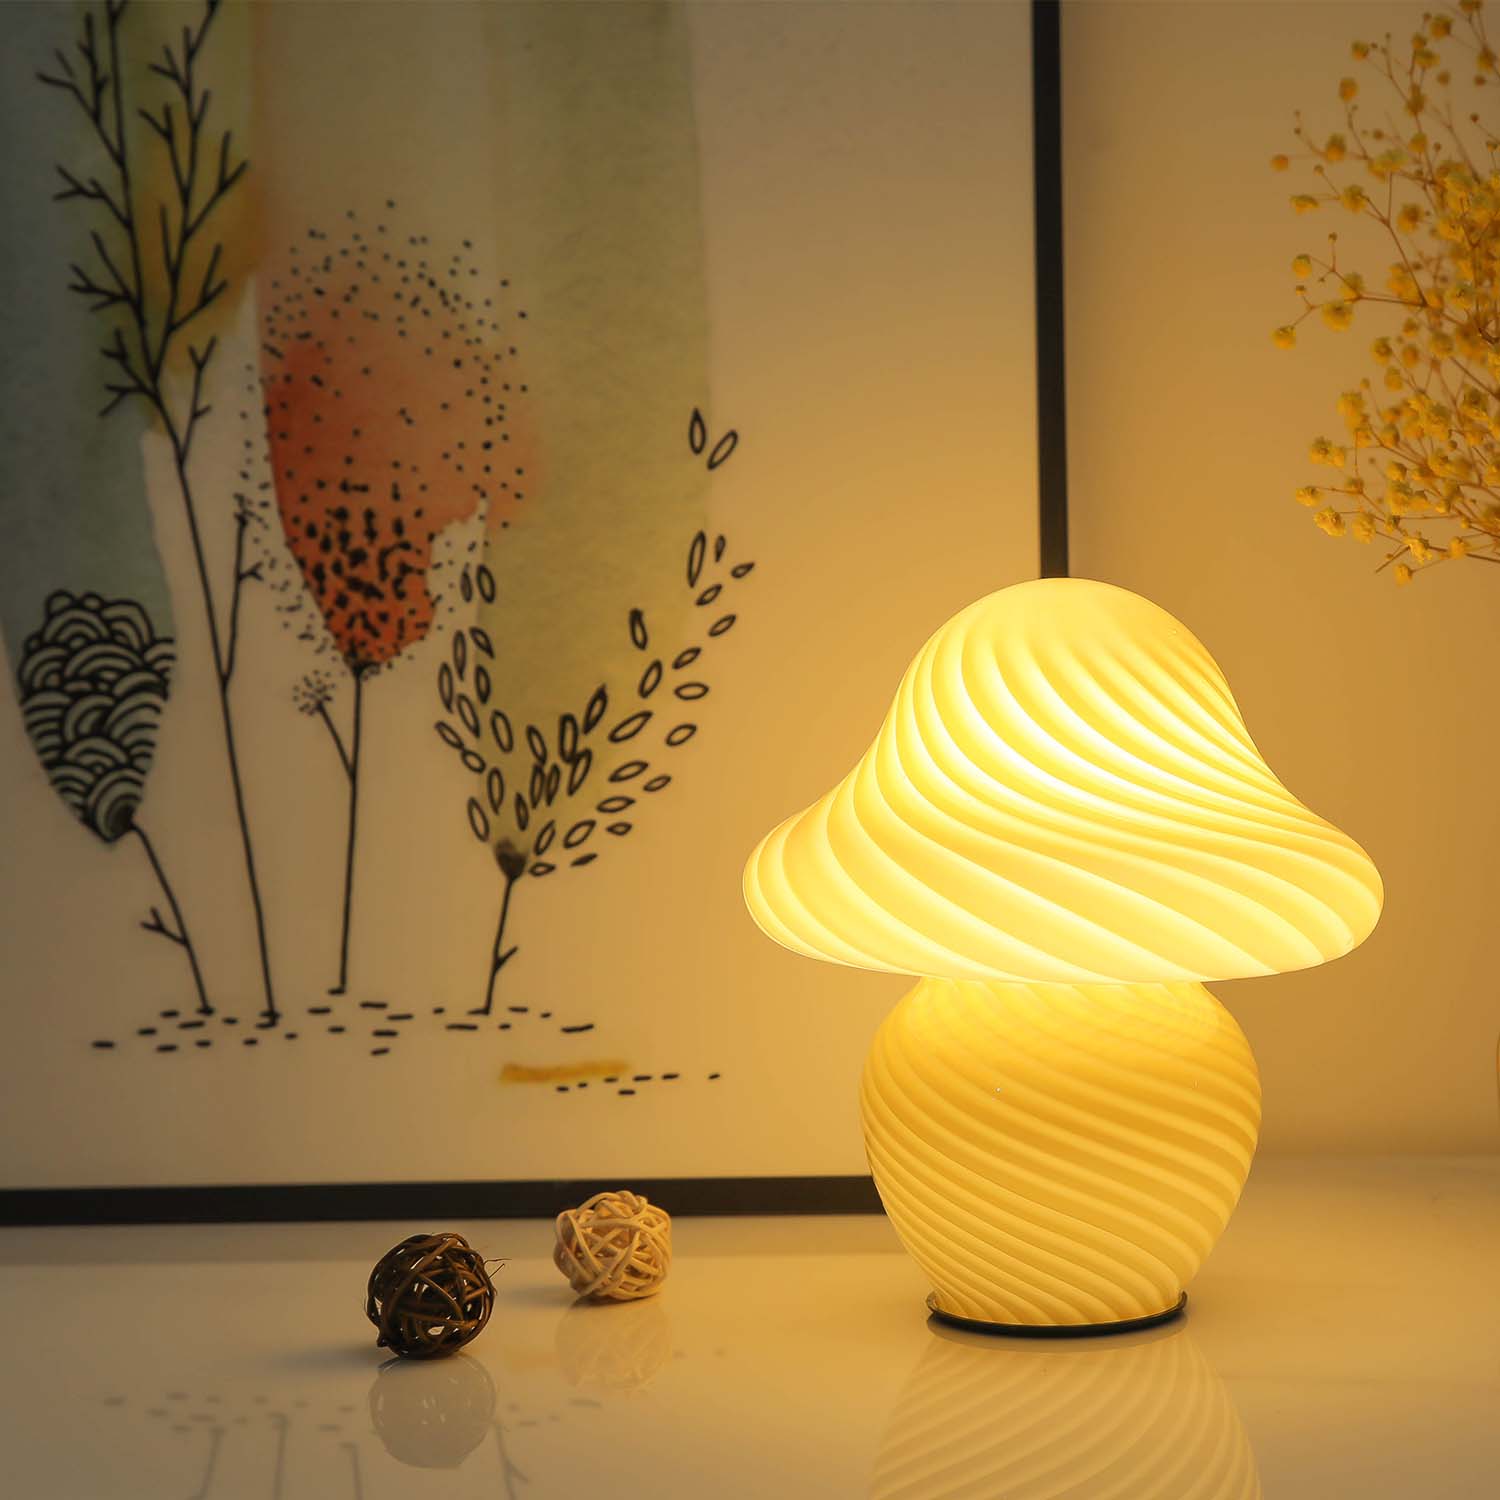 cool lamp ideas